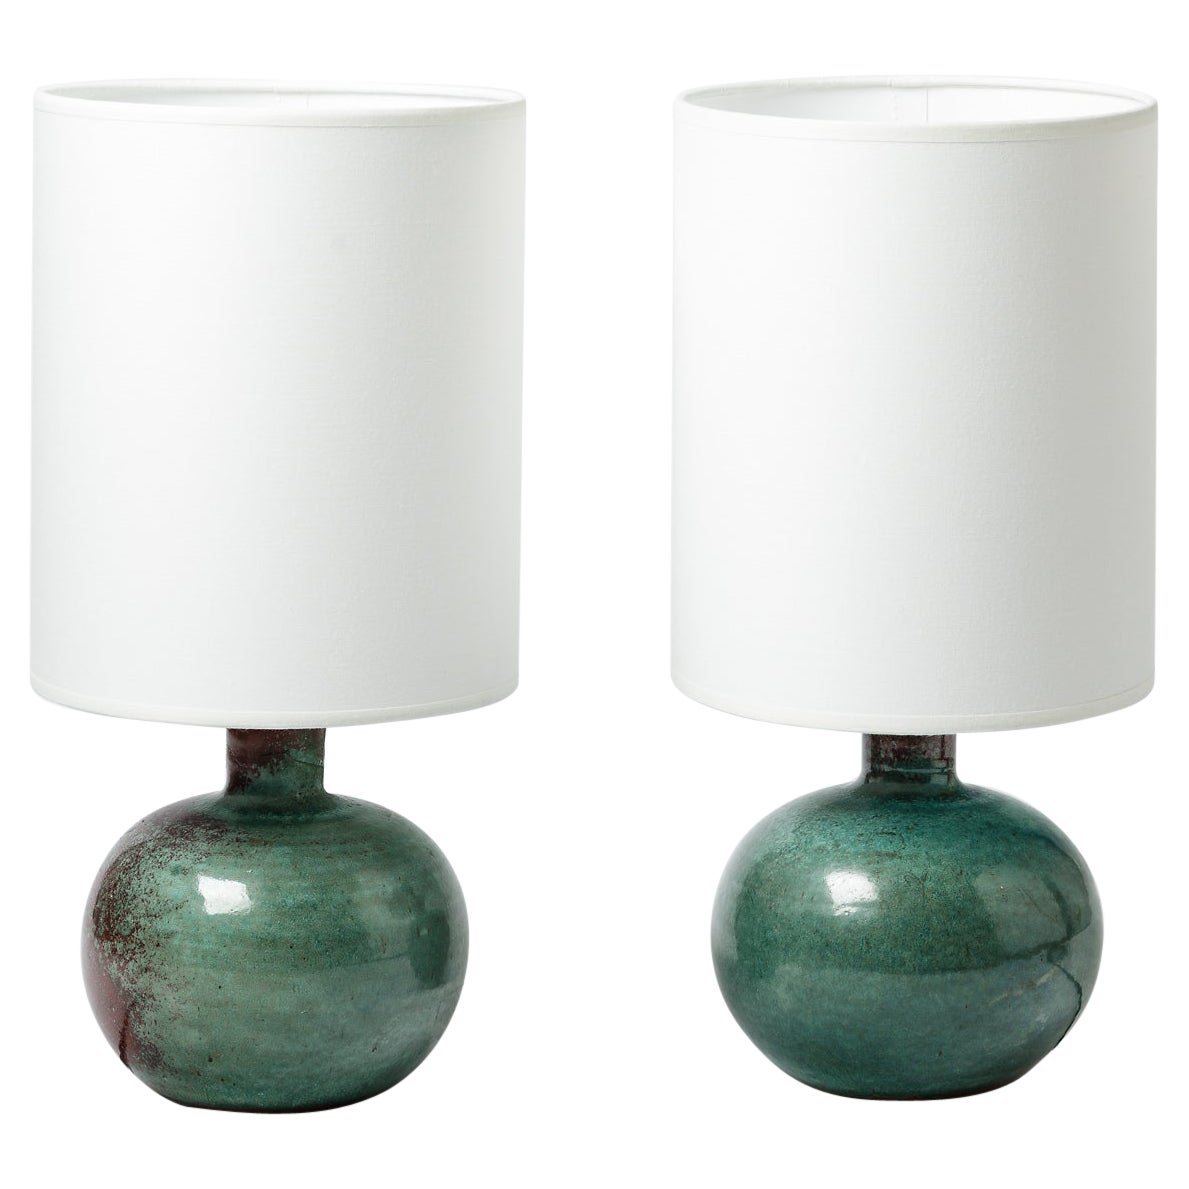 Pair of Ceramic Table Lamps by La Borne Potter's, circa 1960-1970